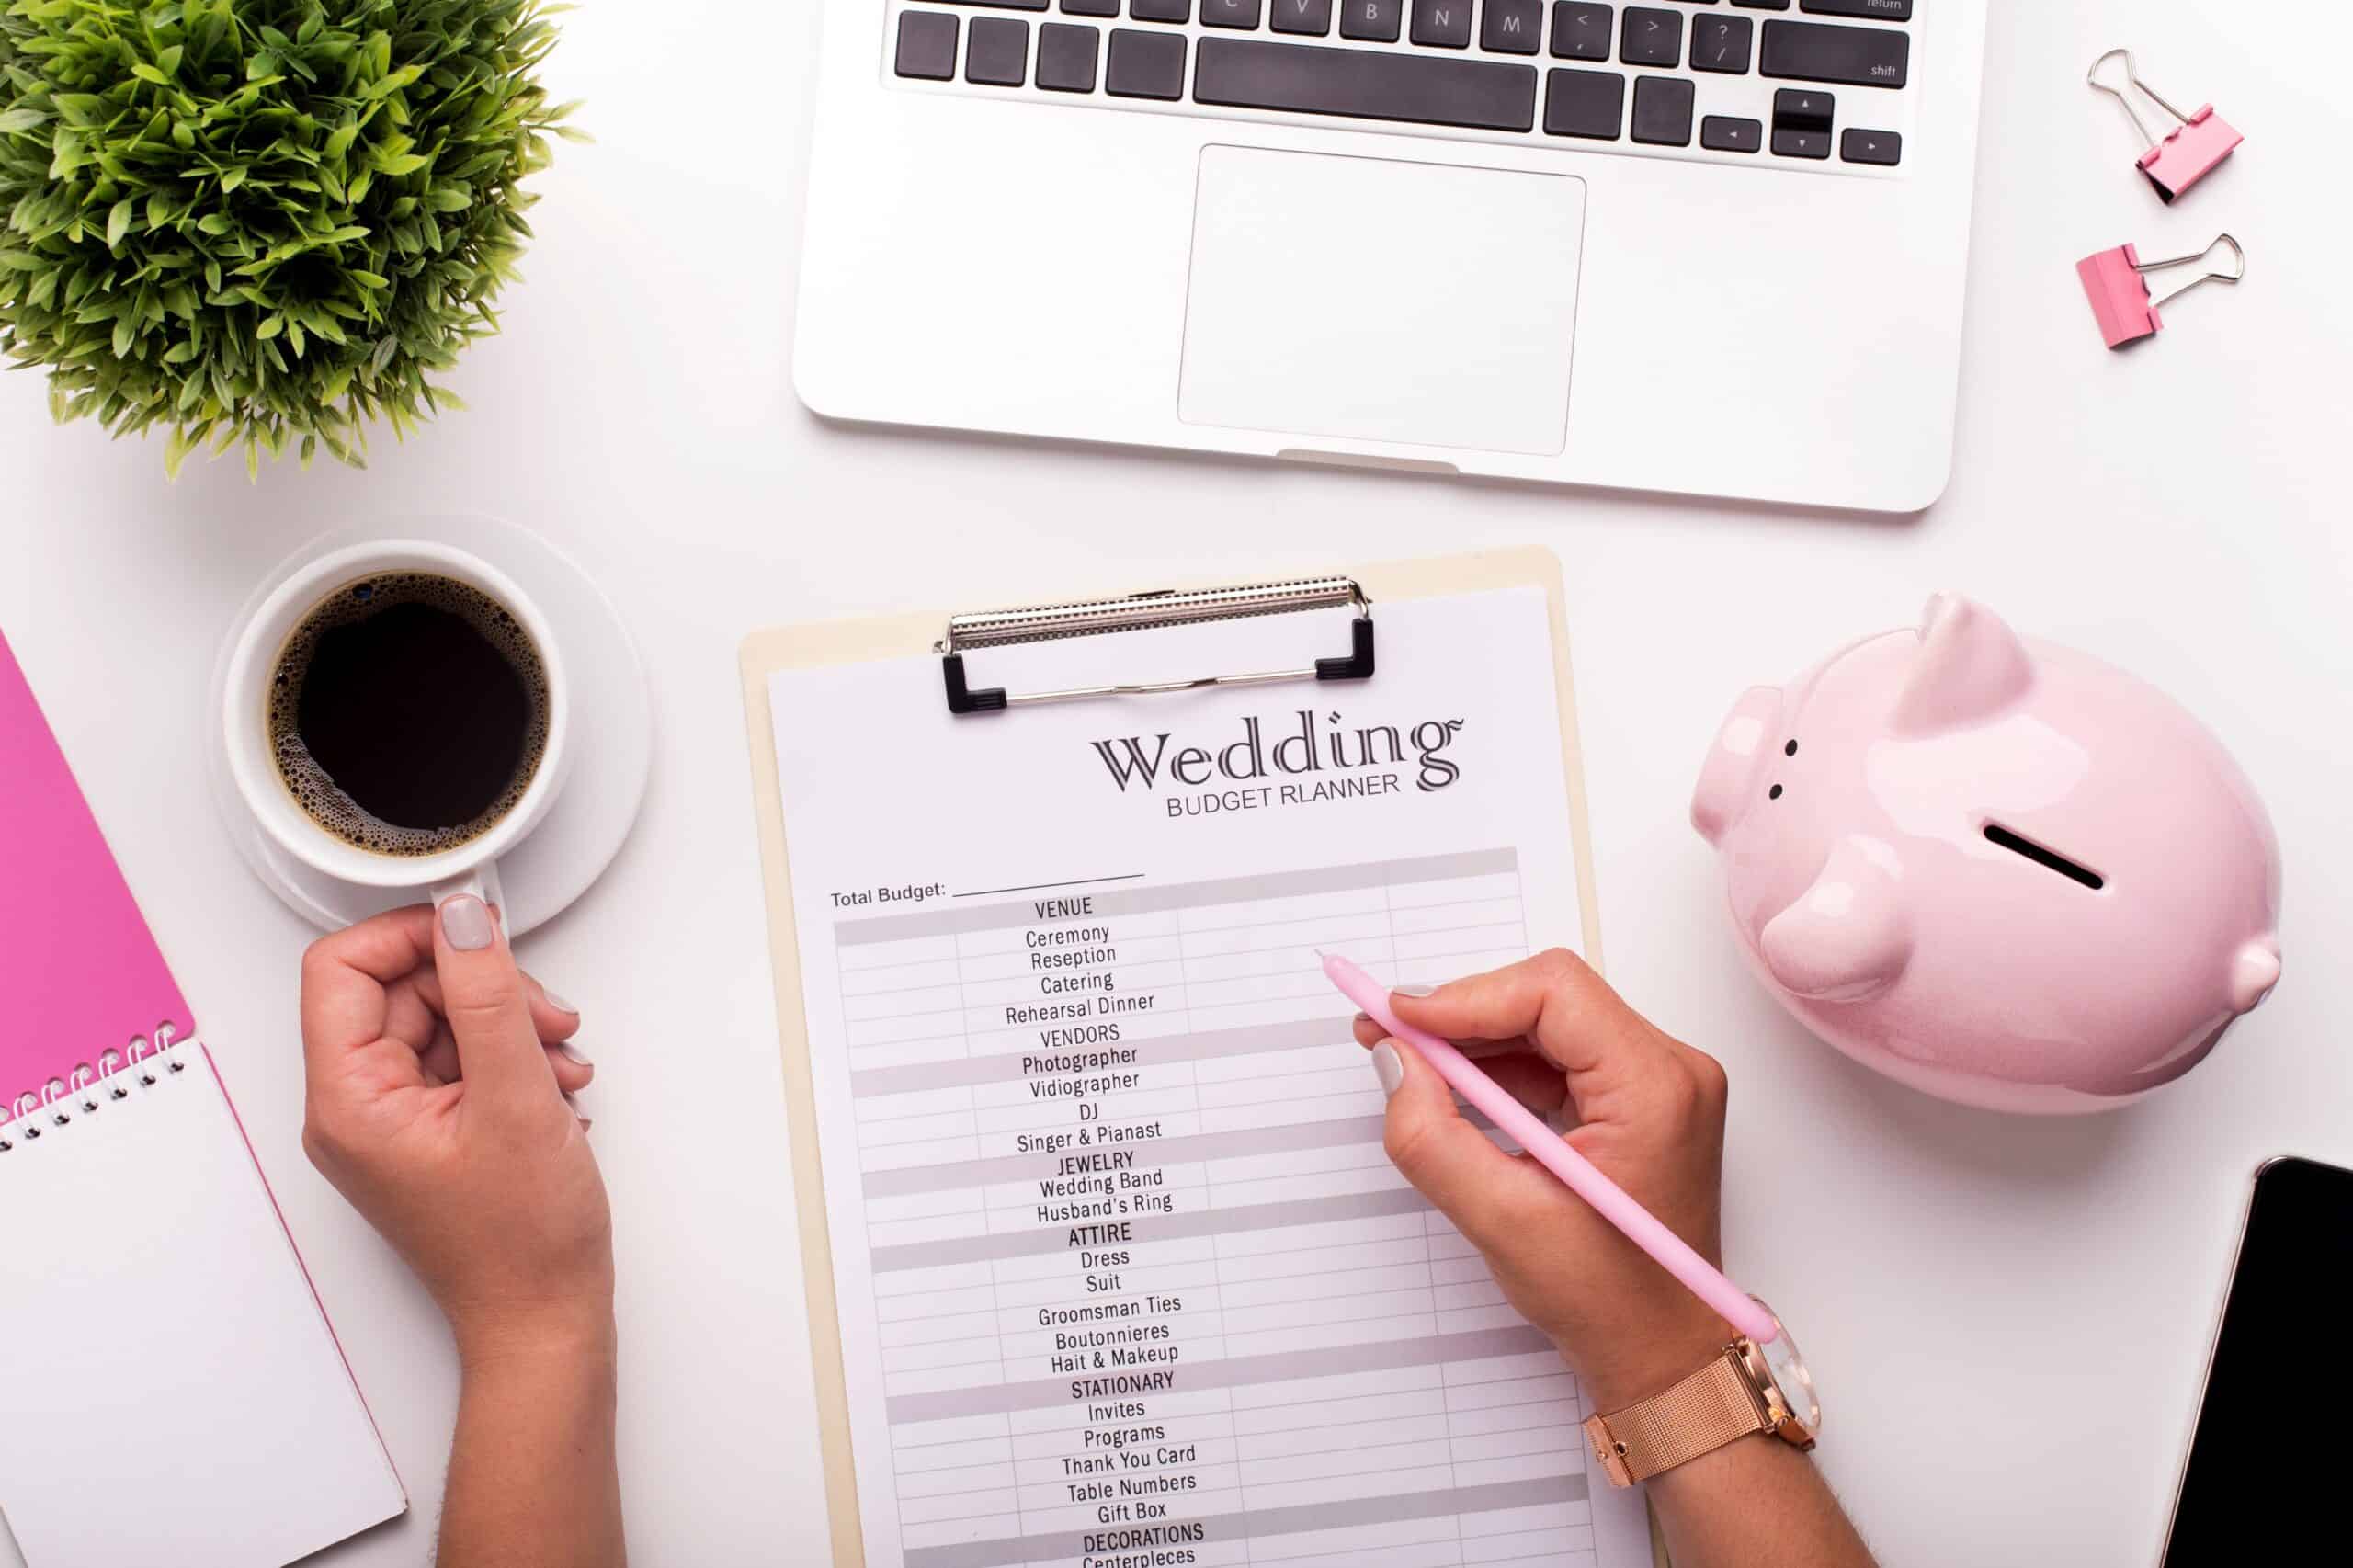 Keep a handle on your summer wedding budget.